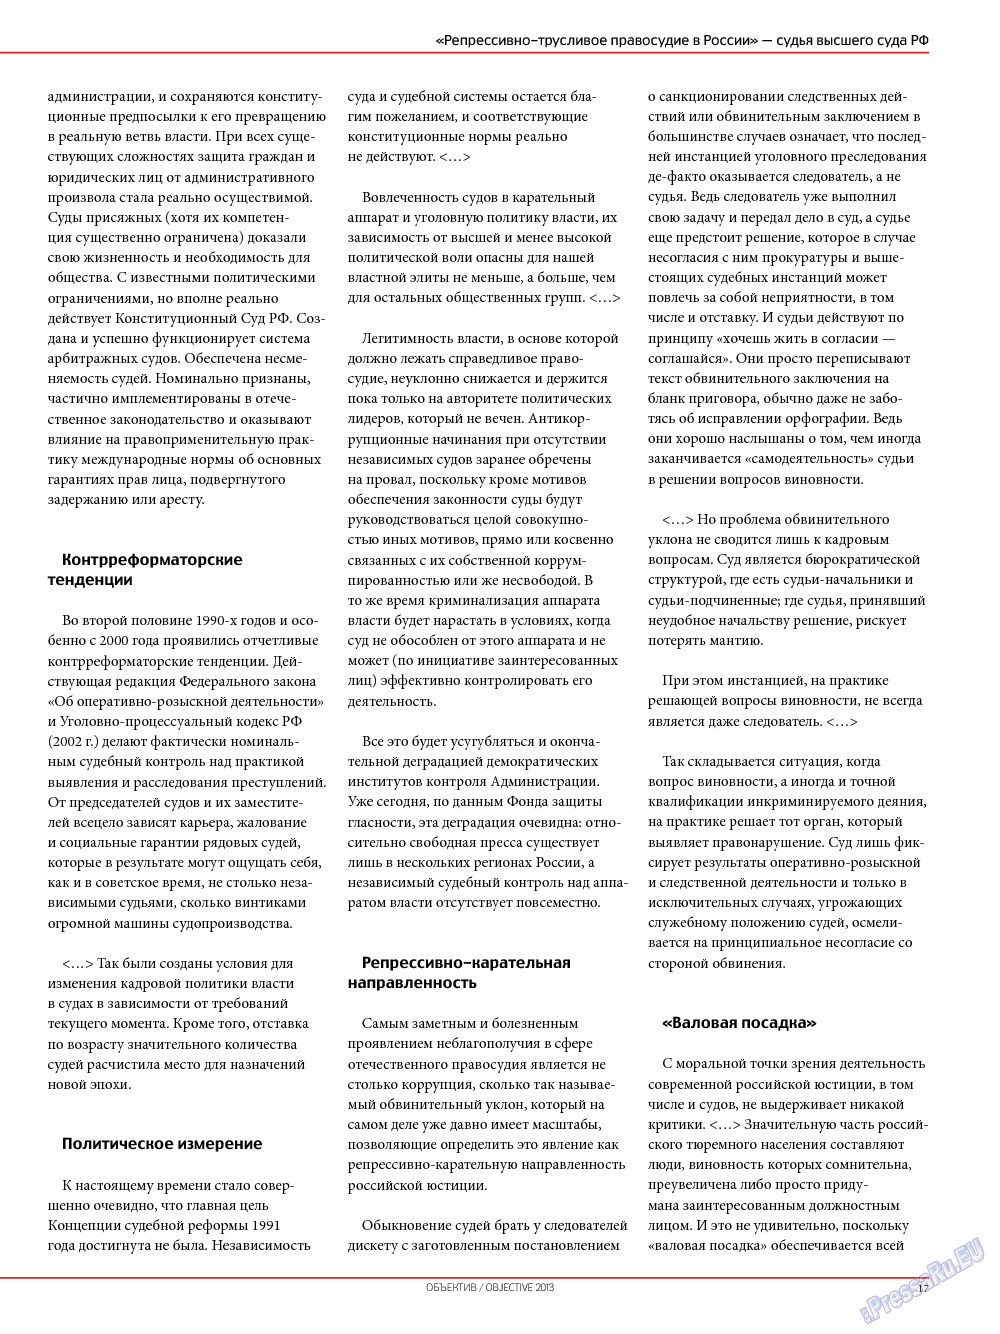 Объектив EU, журнал. 2013 №2 стр.19